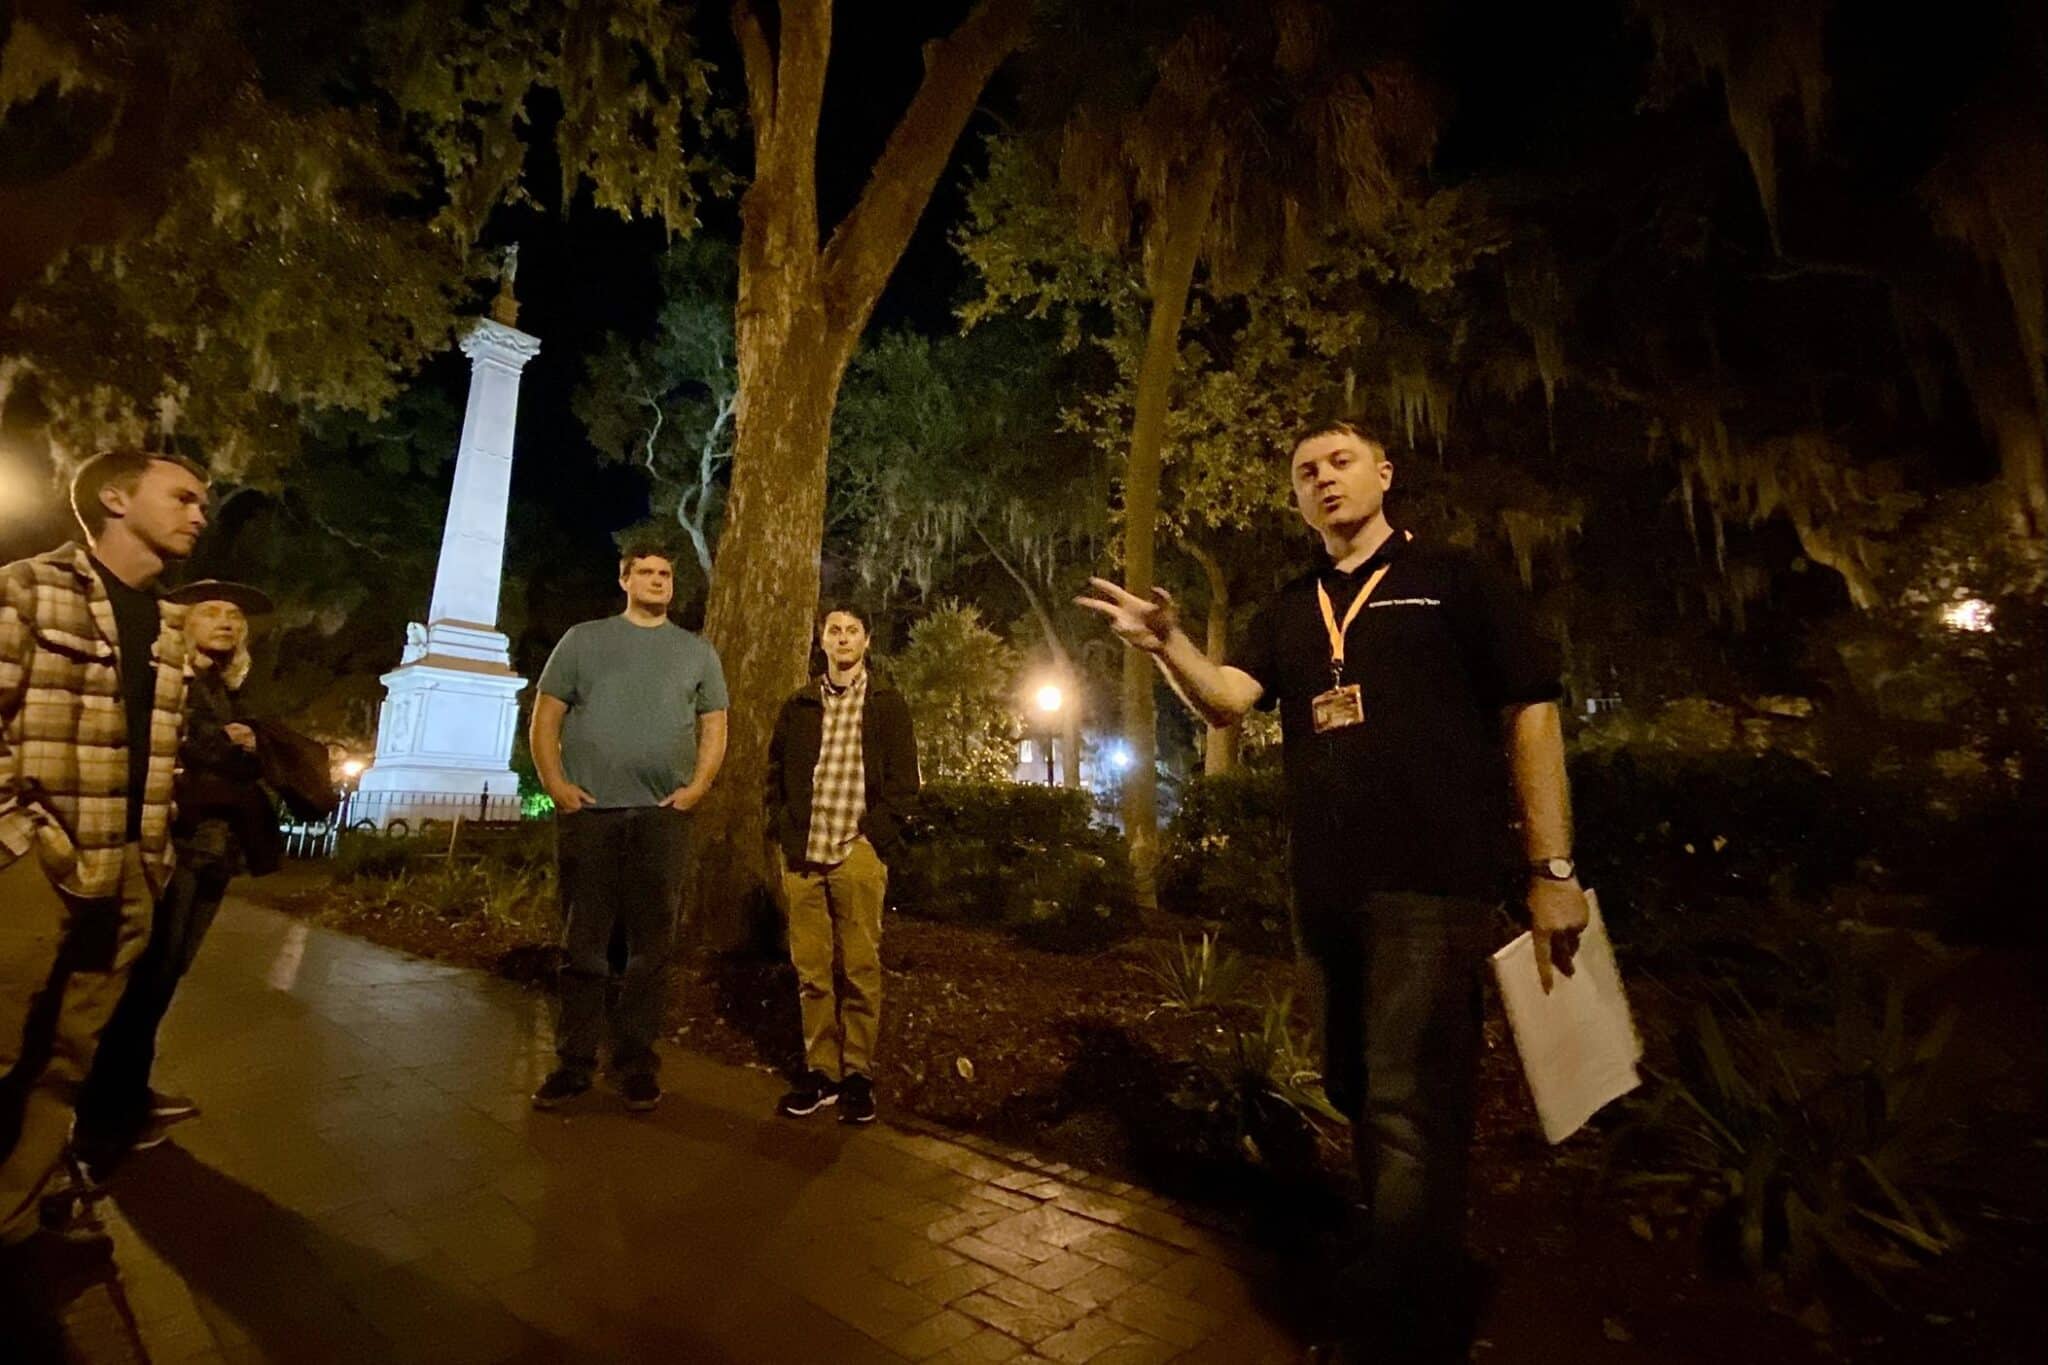 Haunting History: Savannah Dark History Tour serves up frights through facts, not fiction